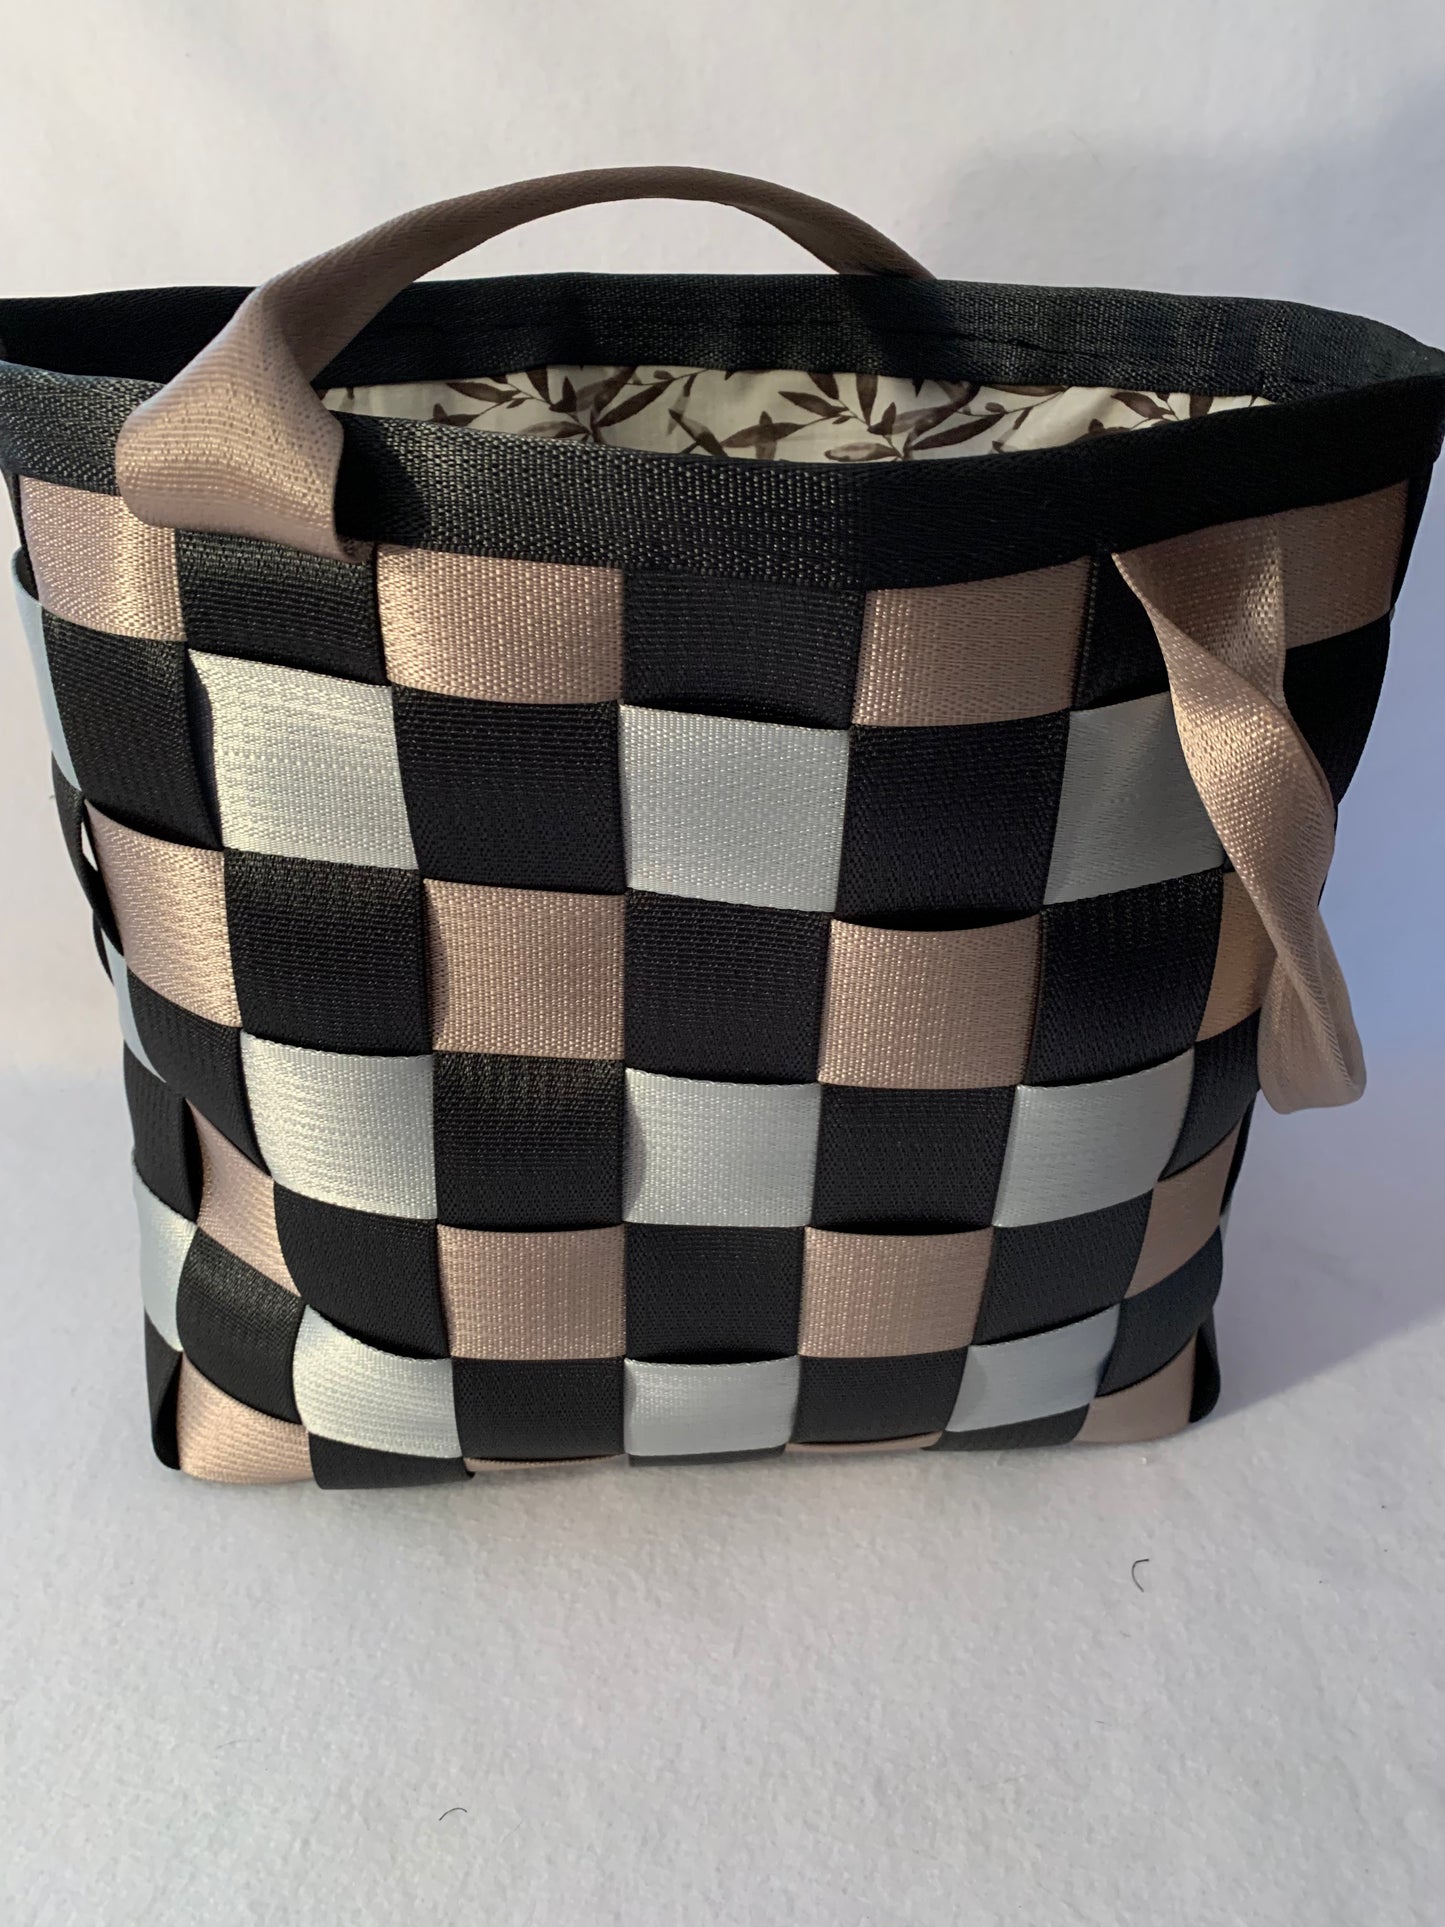 Large seat belt tote, weave style in black, silver & tan, seatbelt handbag, extra large purse